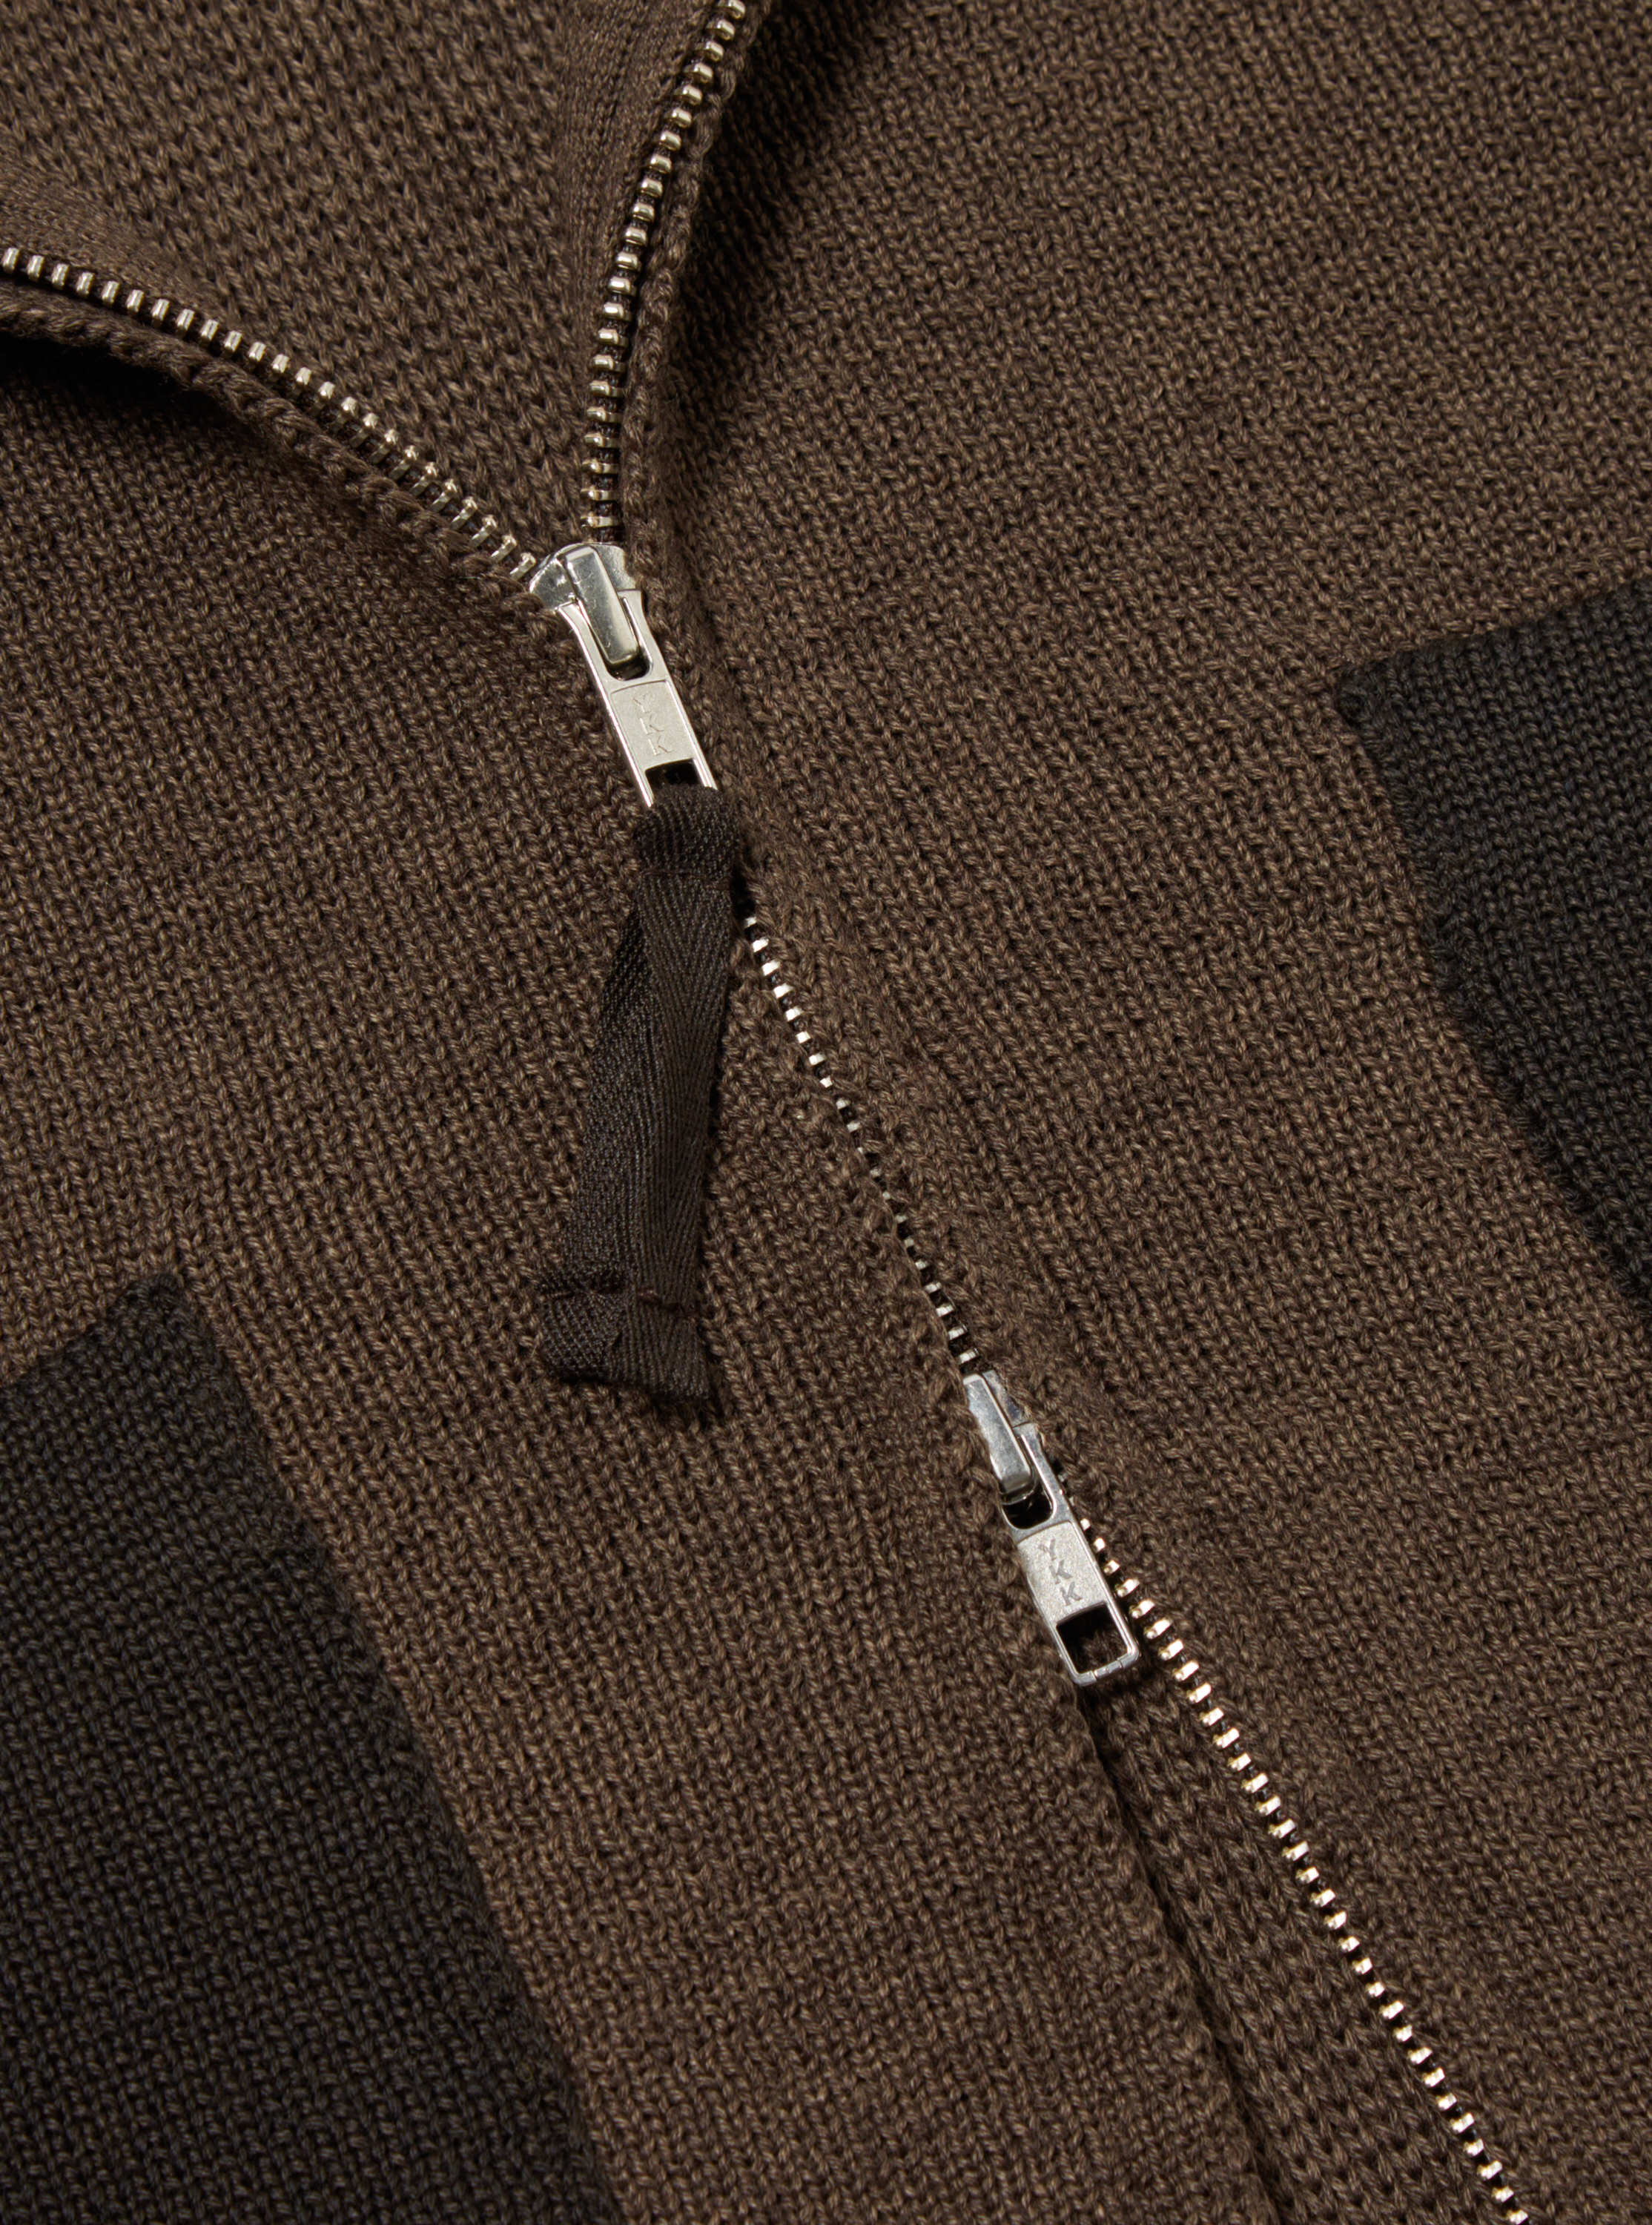 Universal Works Zip Knitwork Jacket in Brown Merino Knit